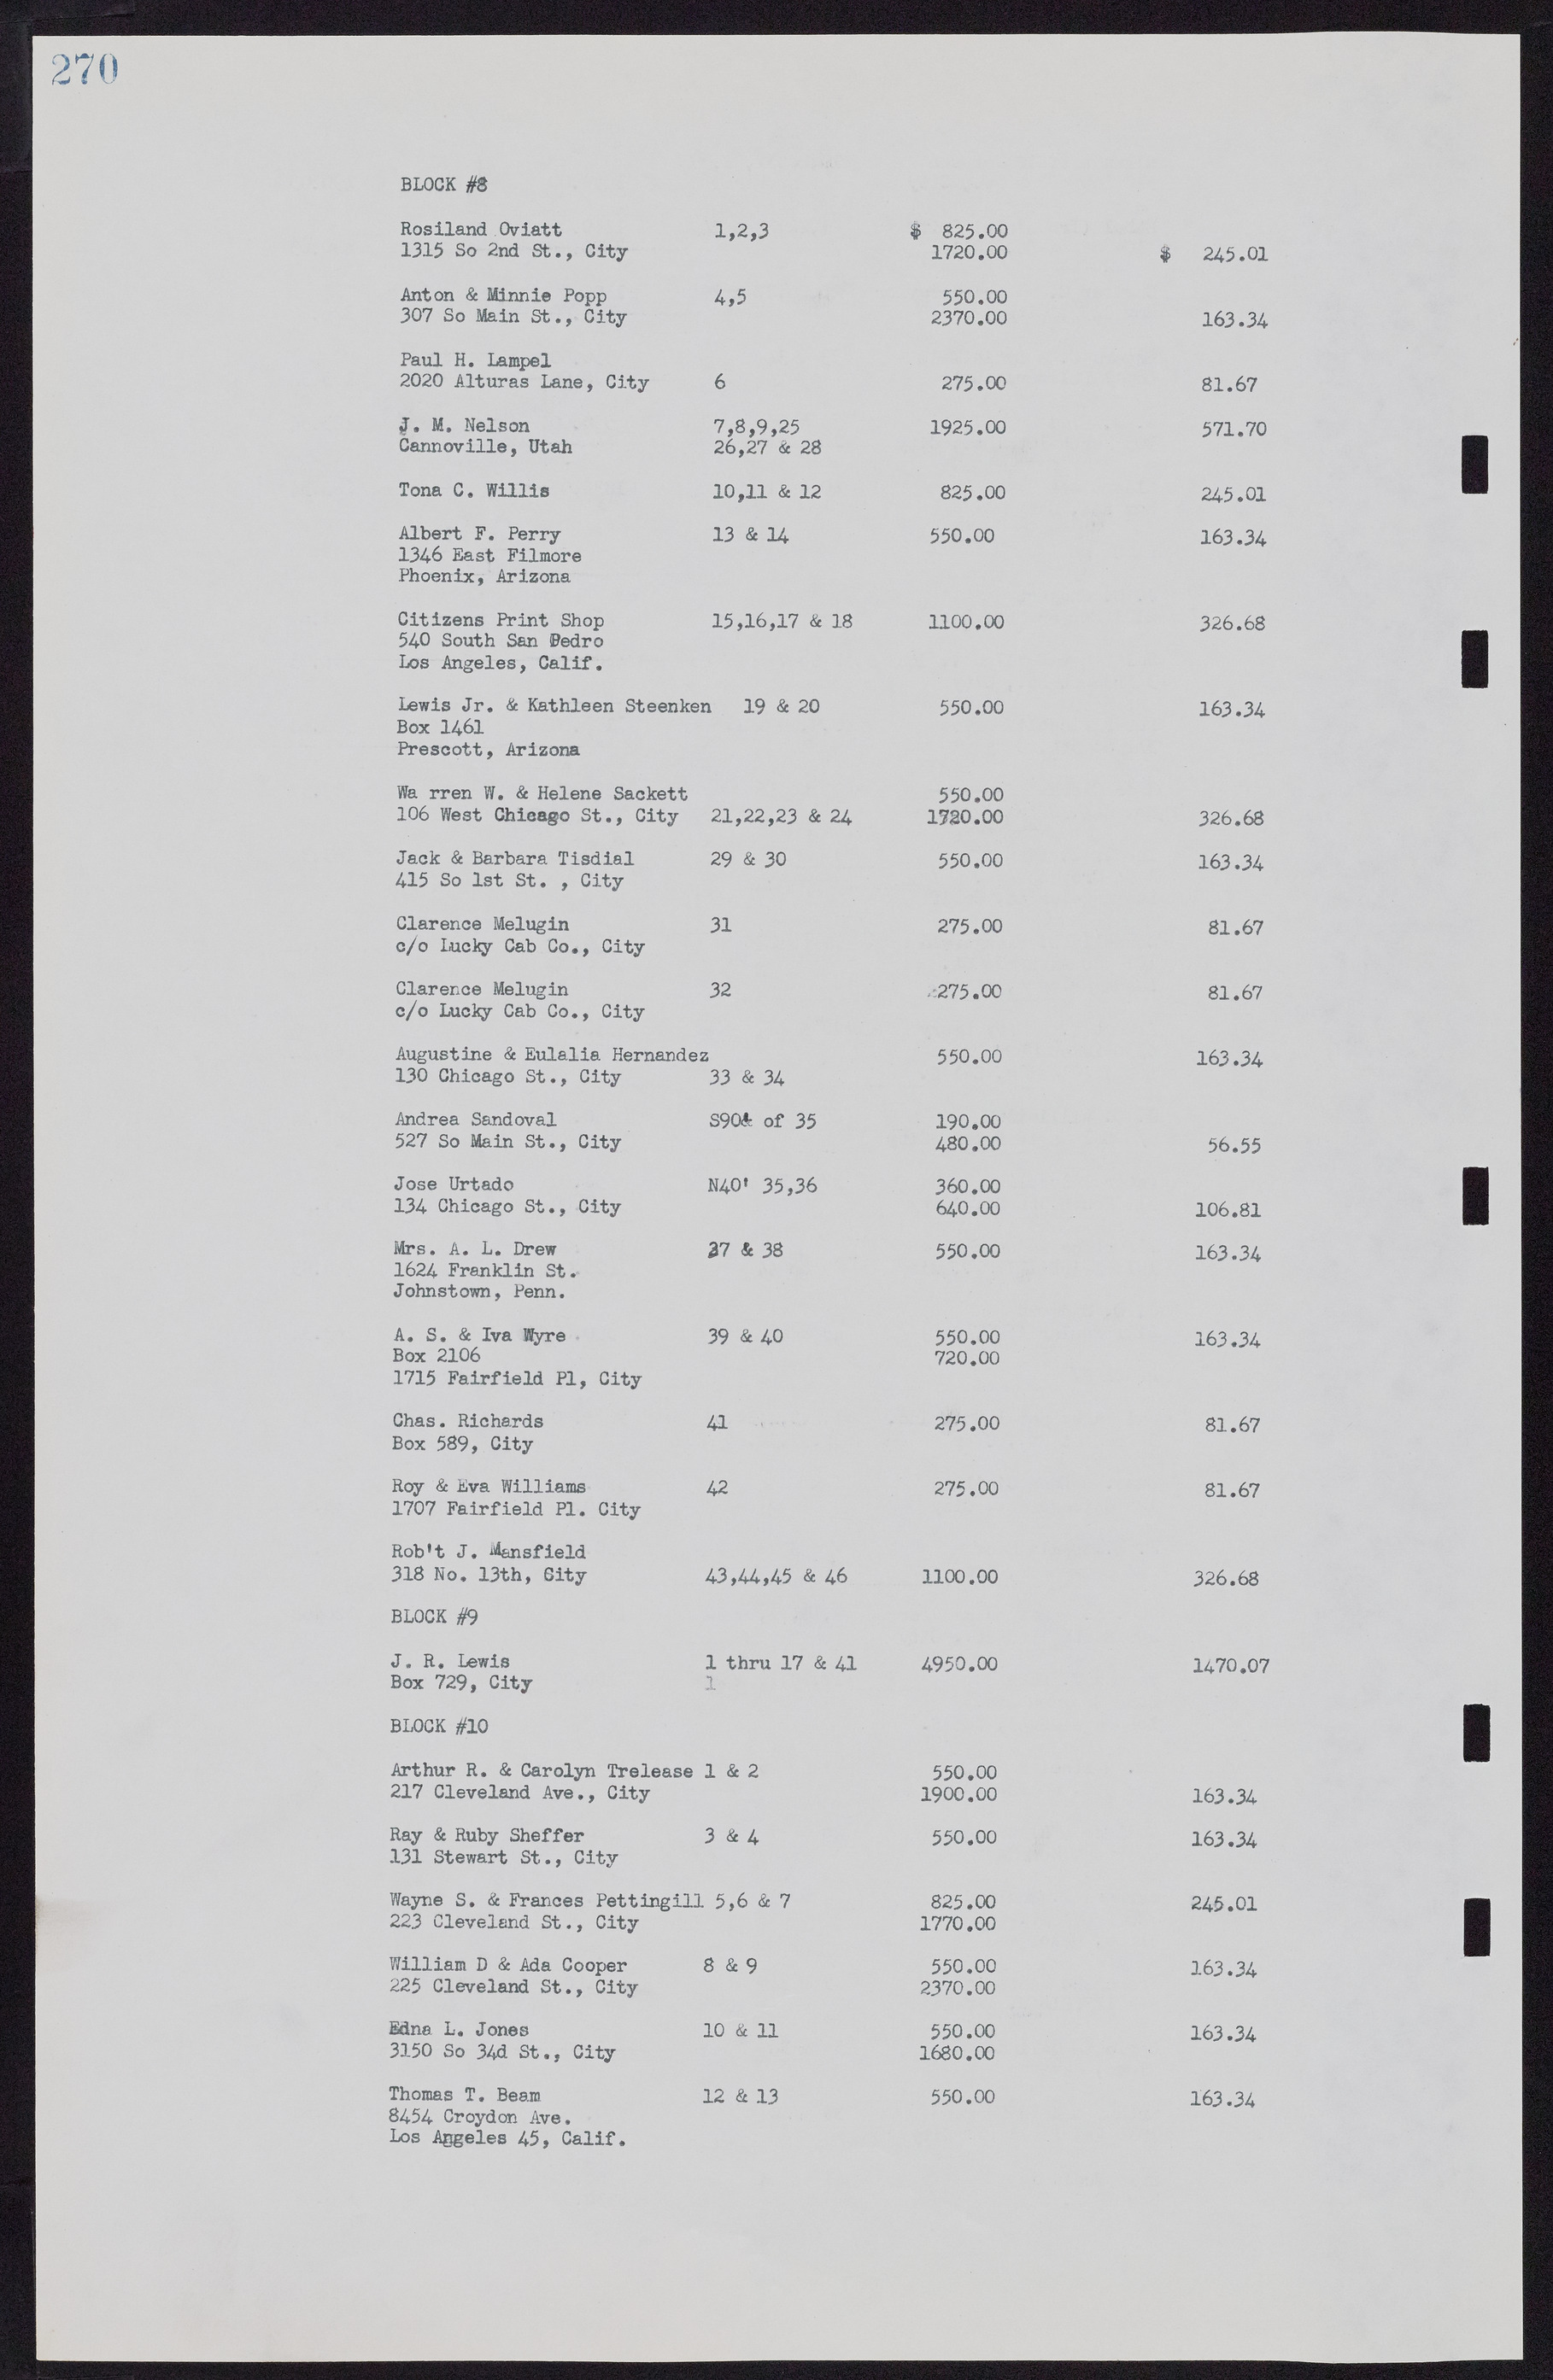 Las Vegas City Commission Minutes, November 7, 1949 to May 21, 1952, lvc000007-282